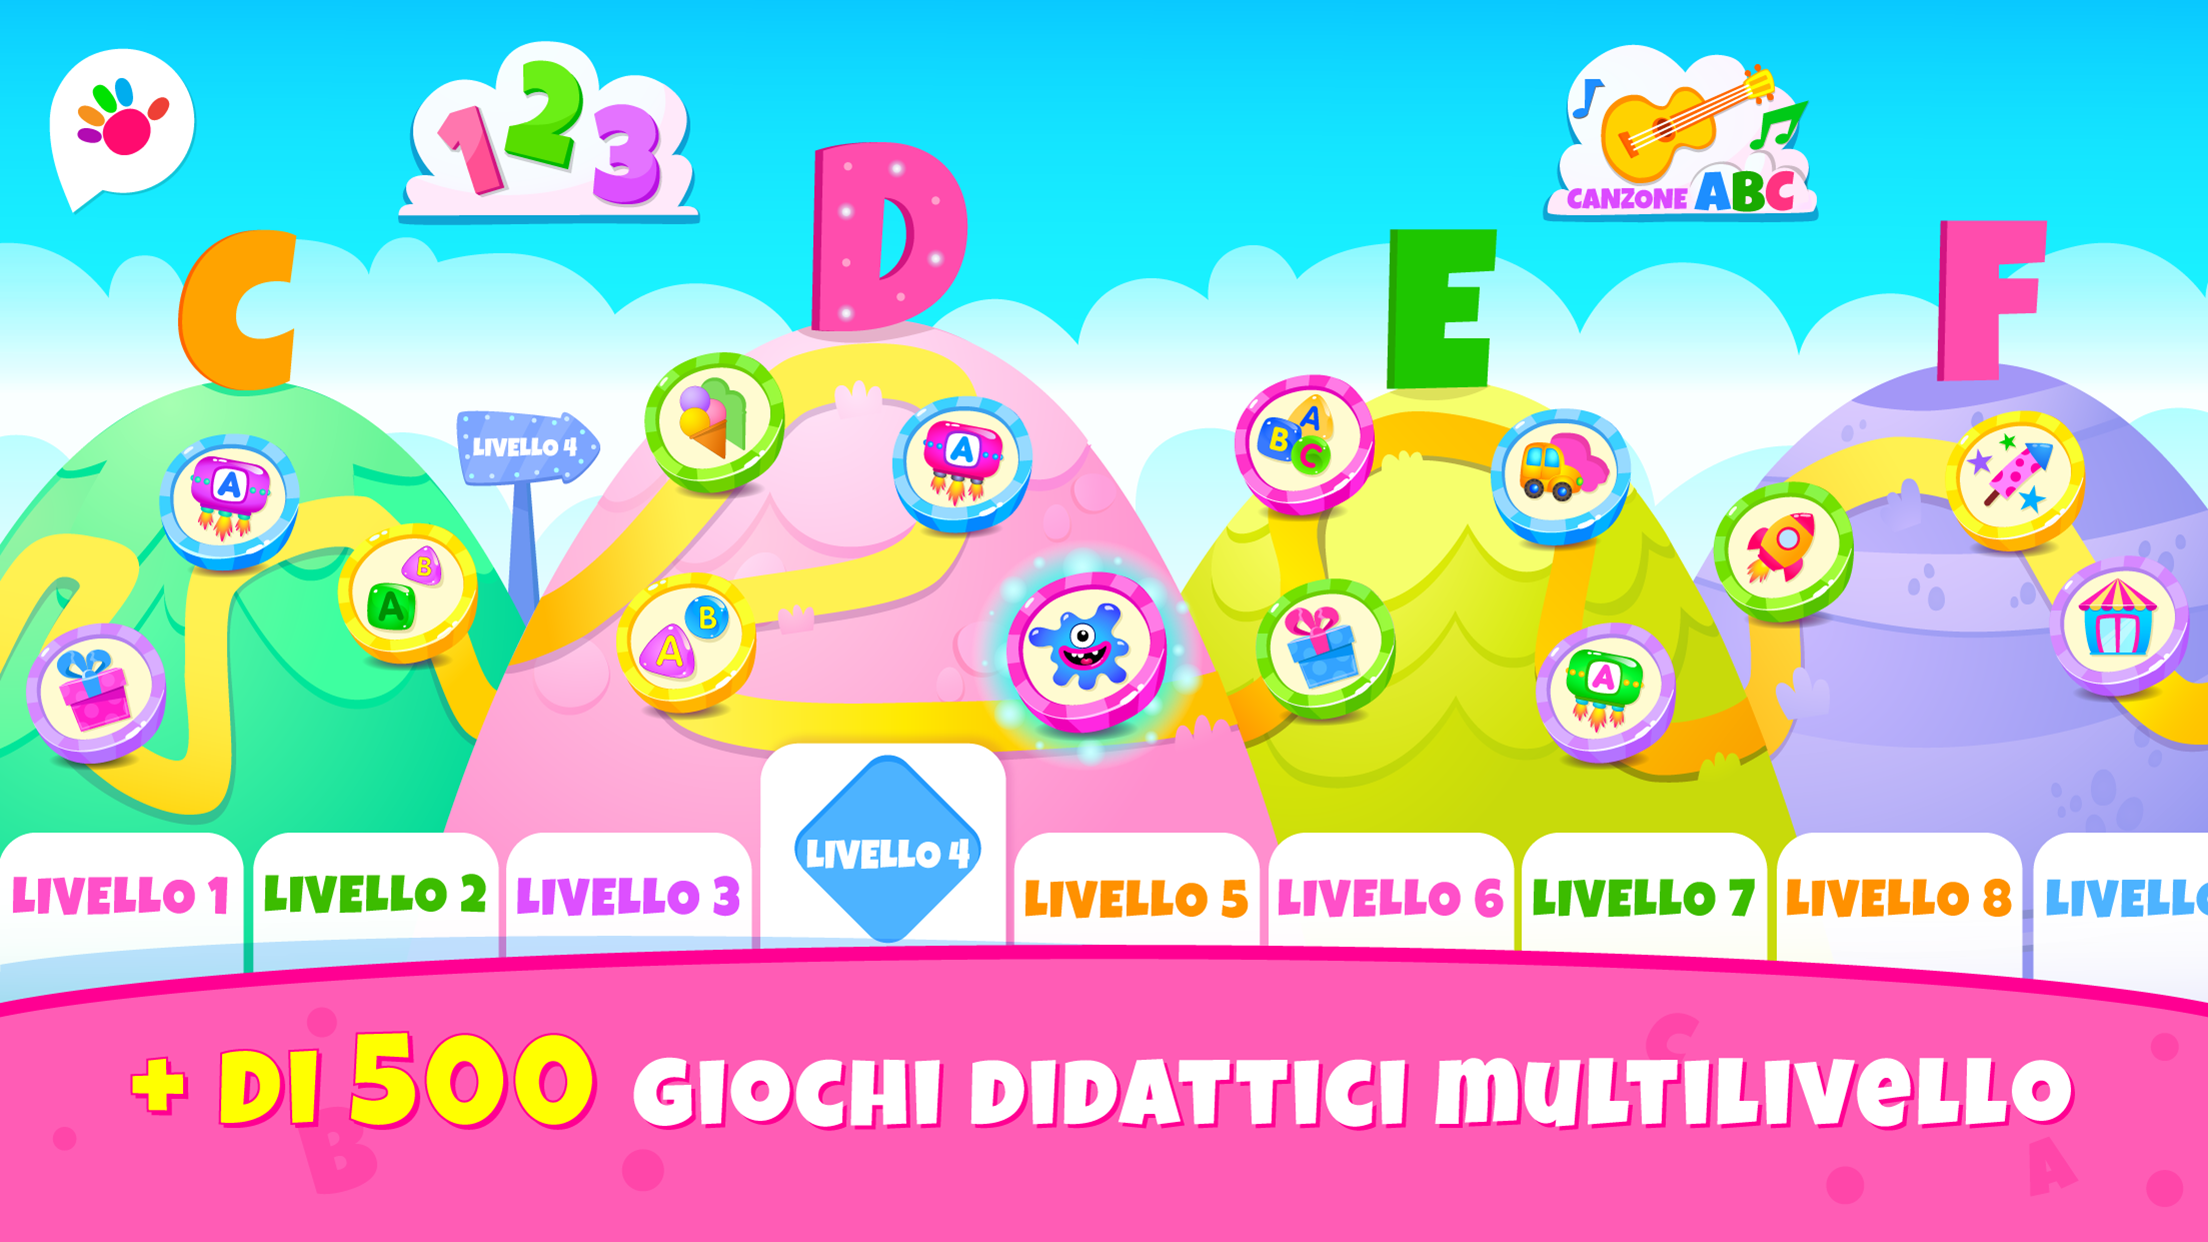 Screenshot 1 of Giochi educativi per bambini! 3.0.9